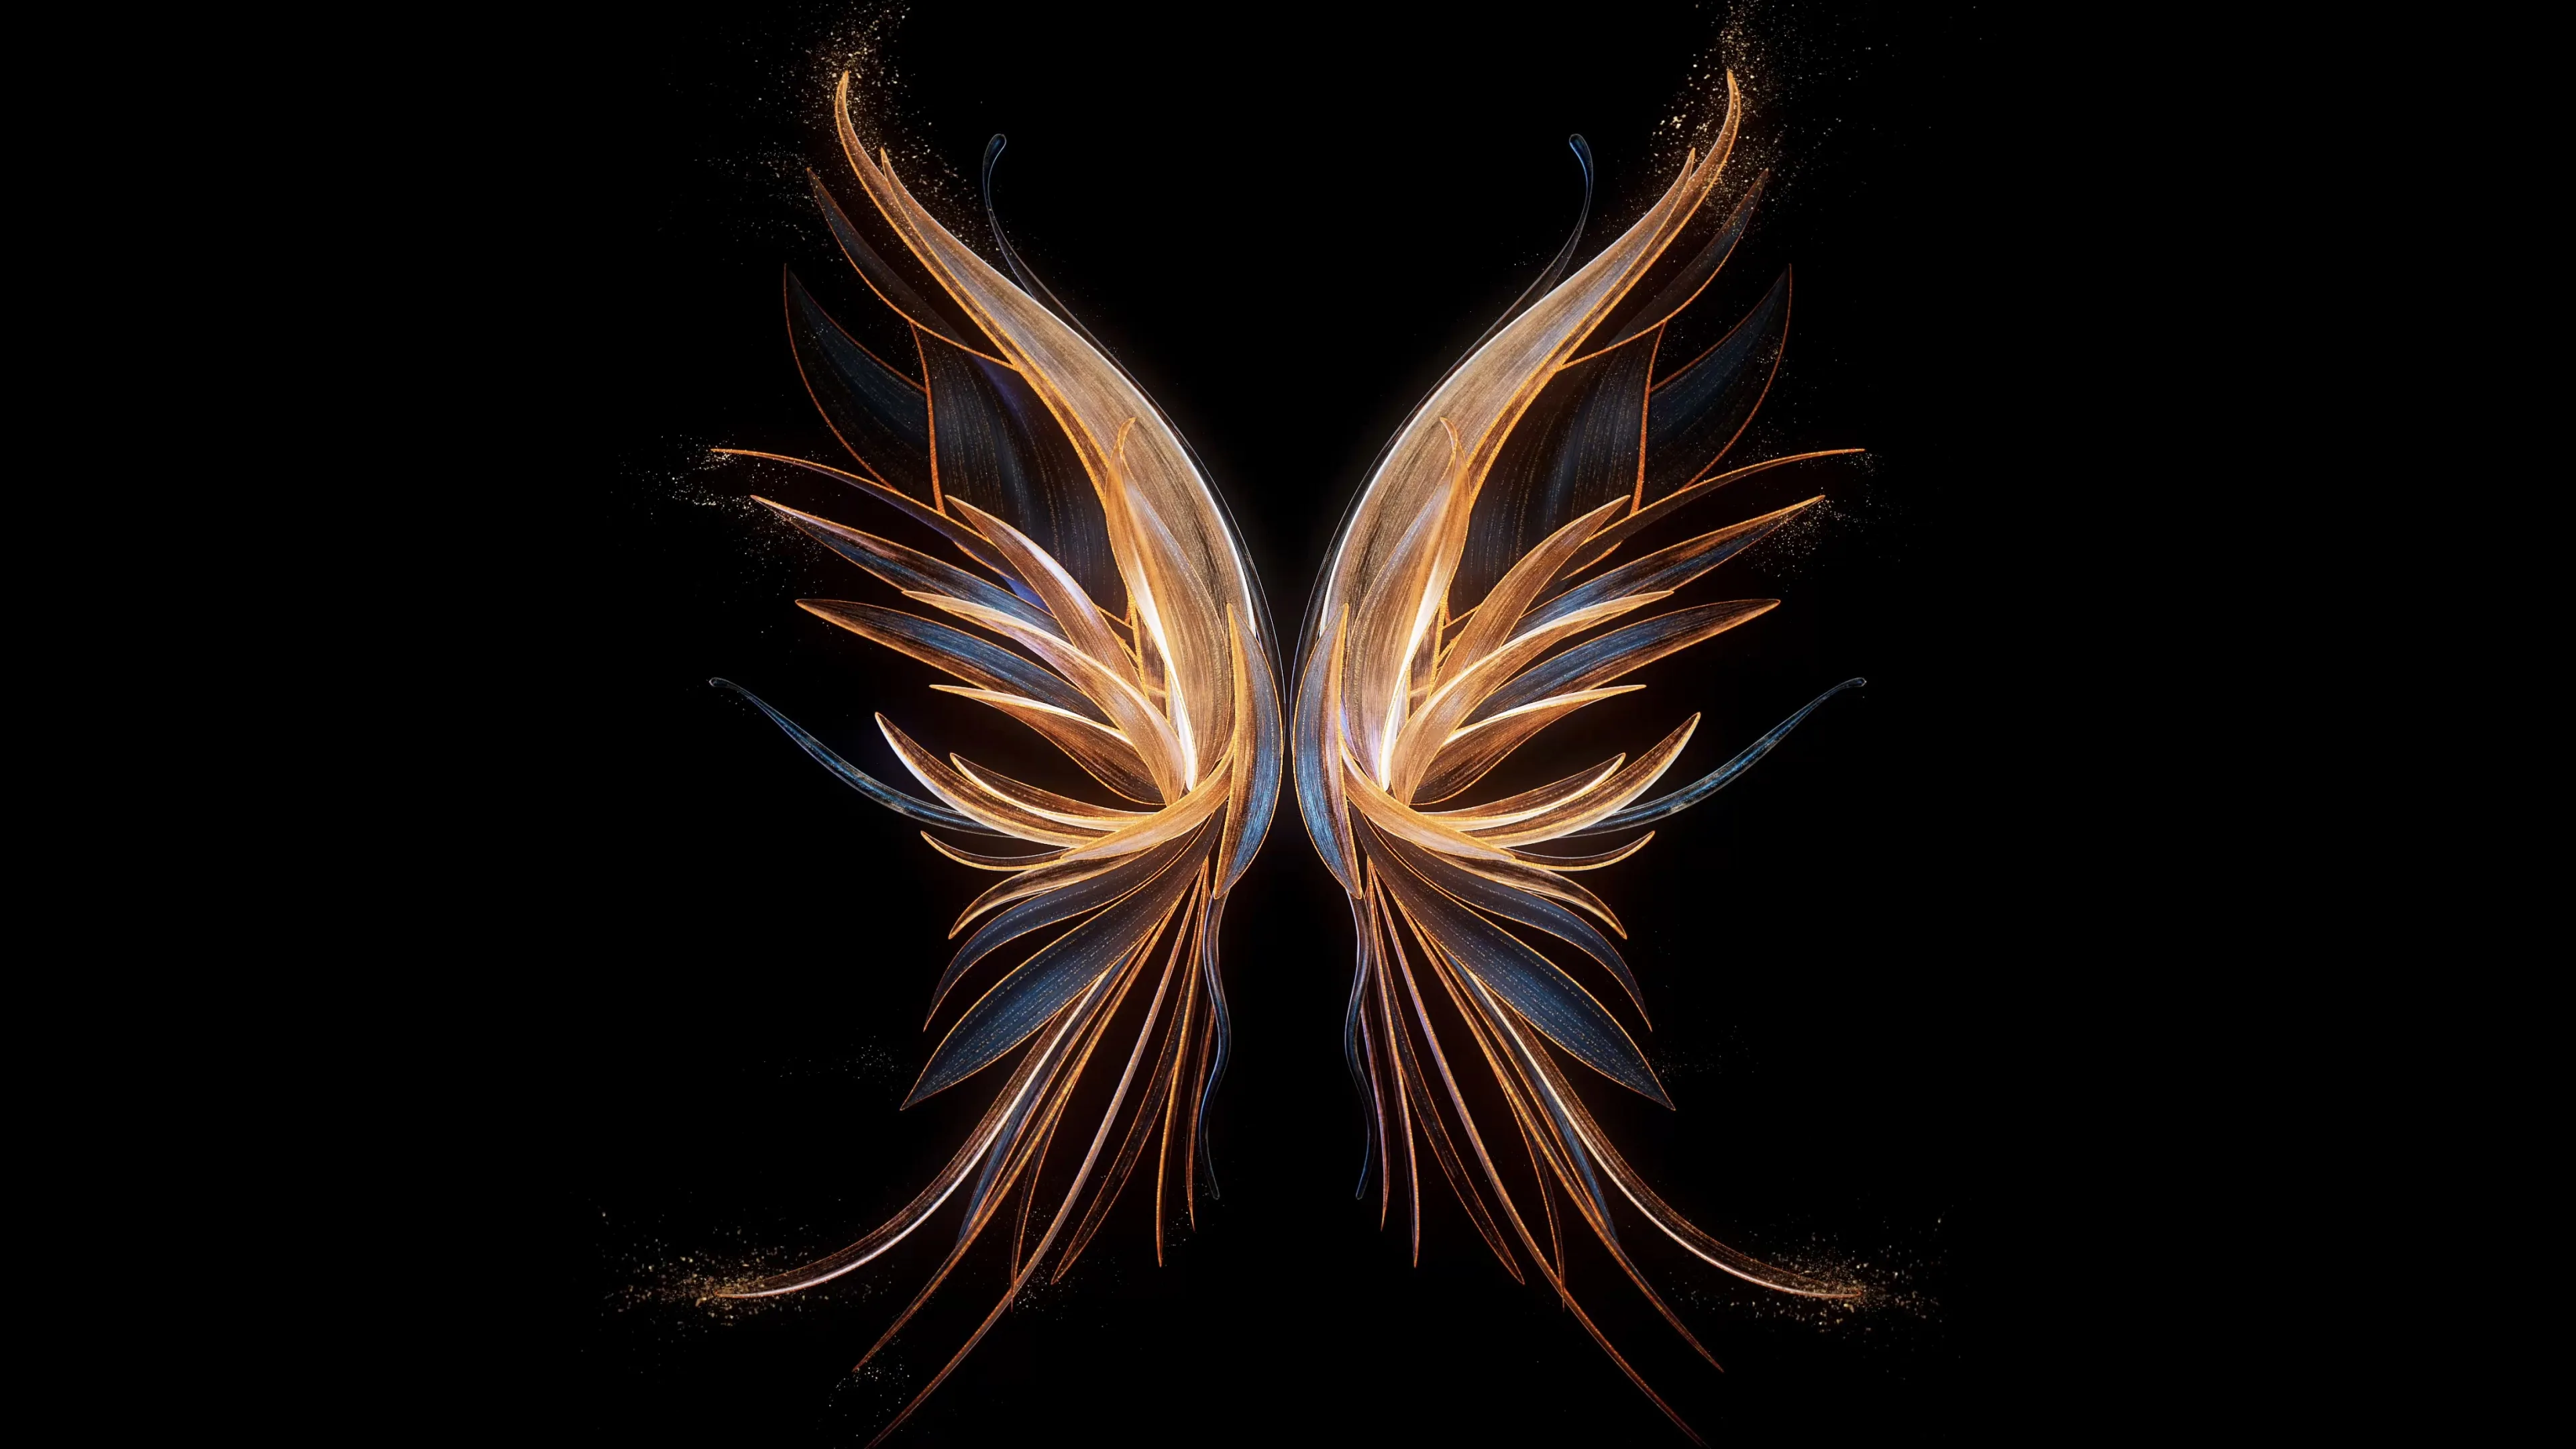 A beautiful digital art wallpaper featuring angel wings in stunning 4K resolution.